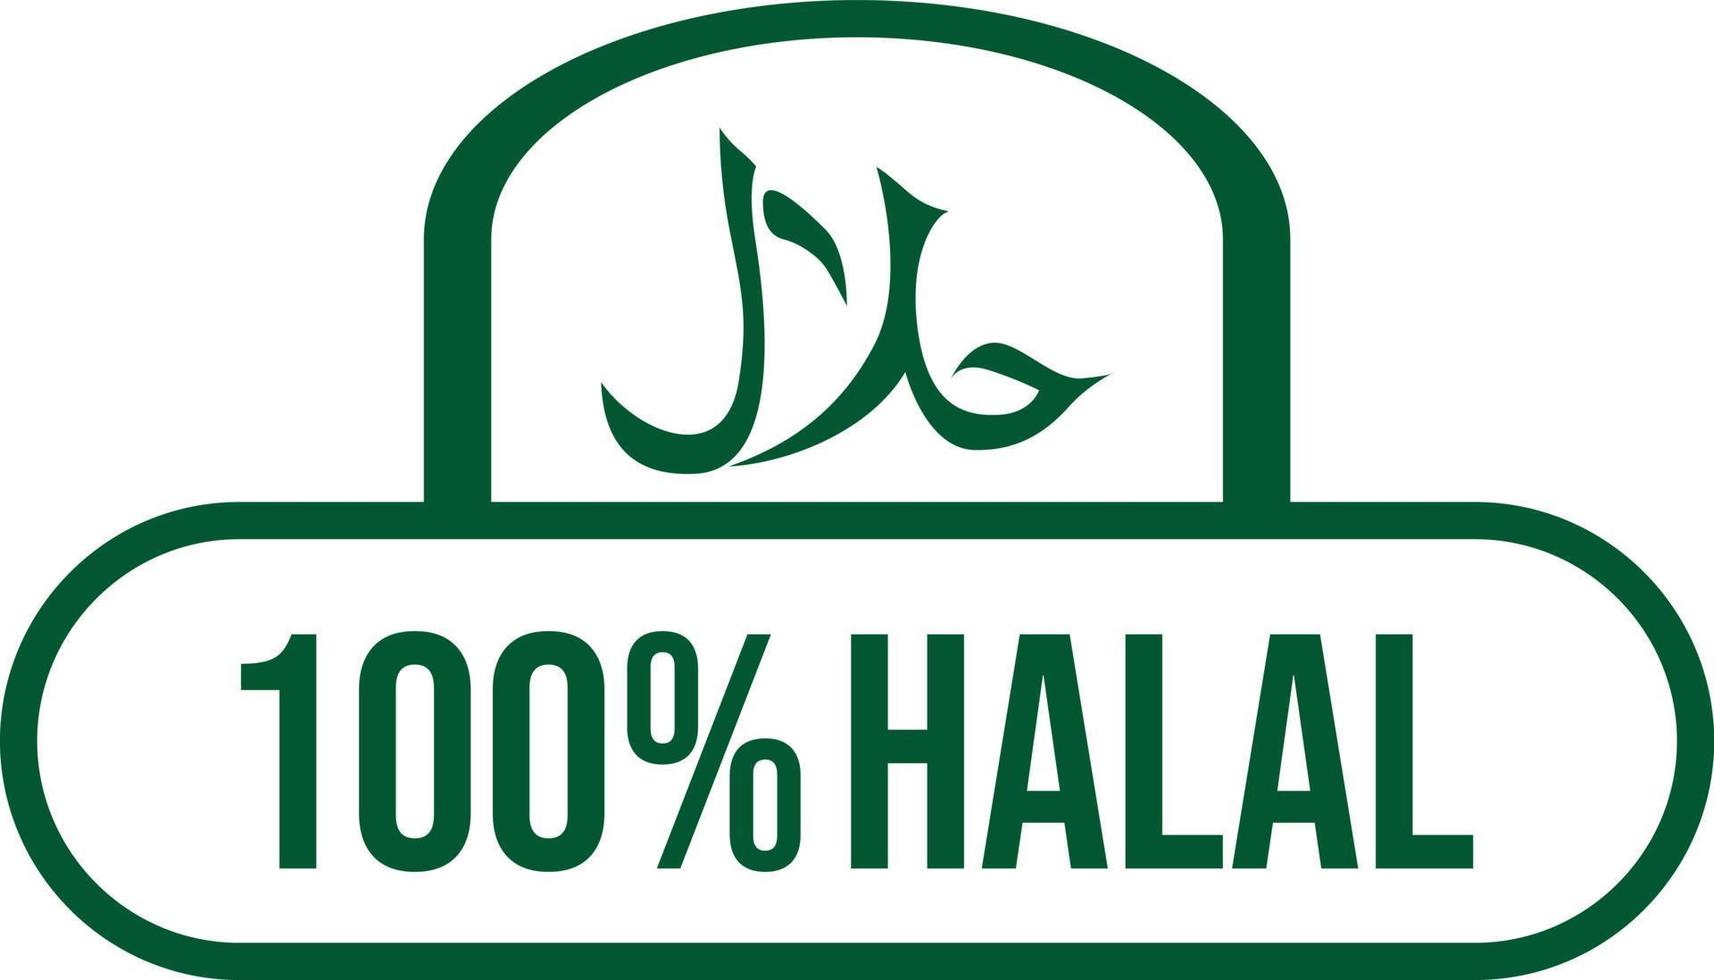 halal logo vecteur badge image des illustrations